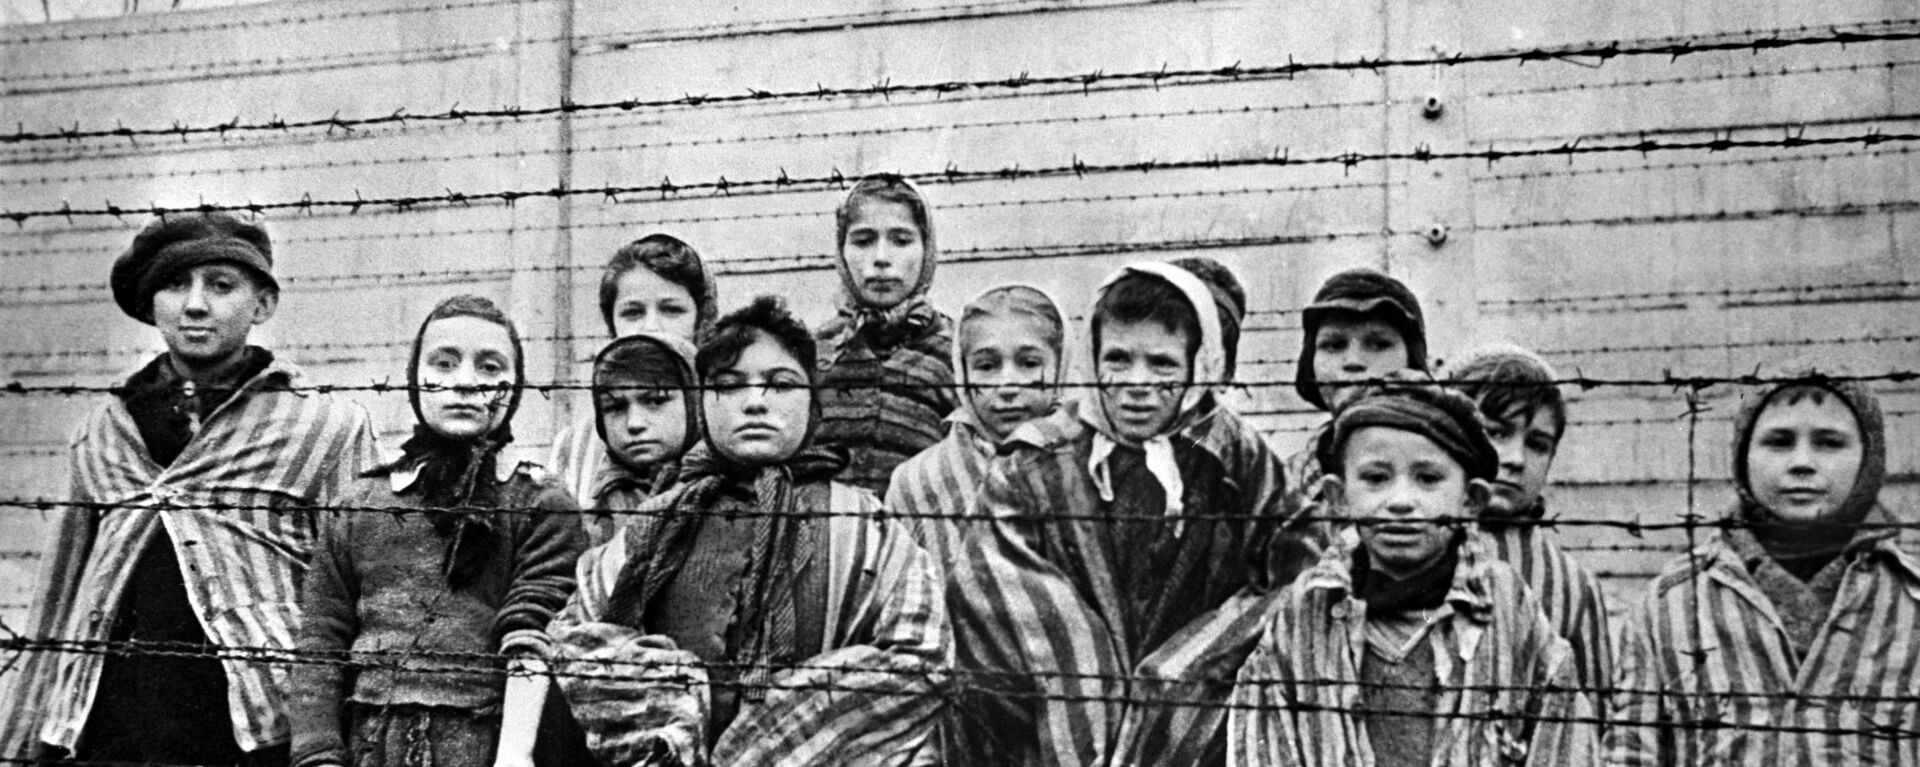 Trẻ em bị giam giữ tại trại tập trung Auschwitz, 1945 - Sputnik Việt Nam, 1920, 01.06.2020